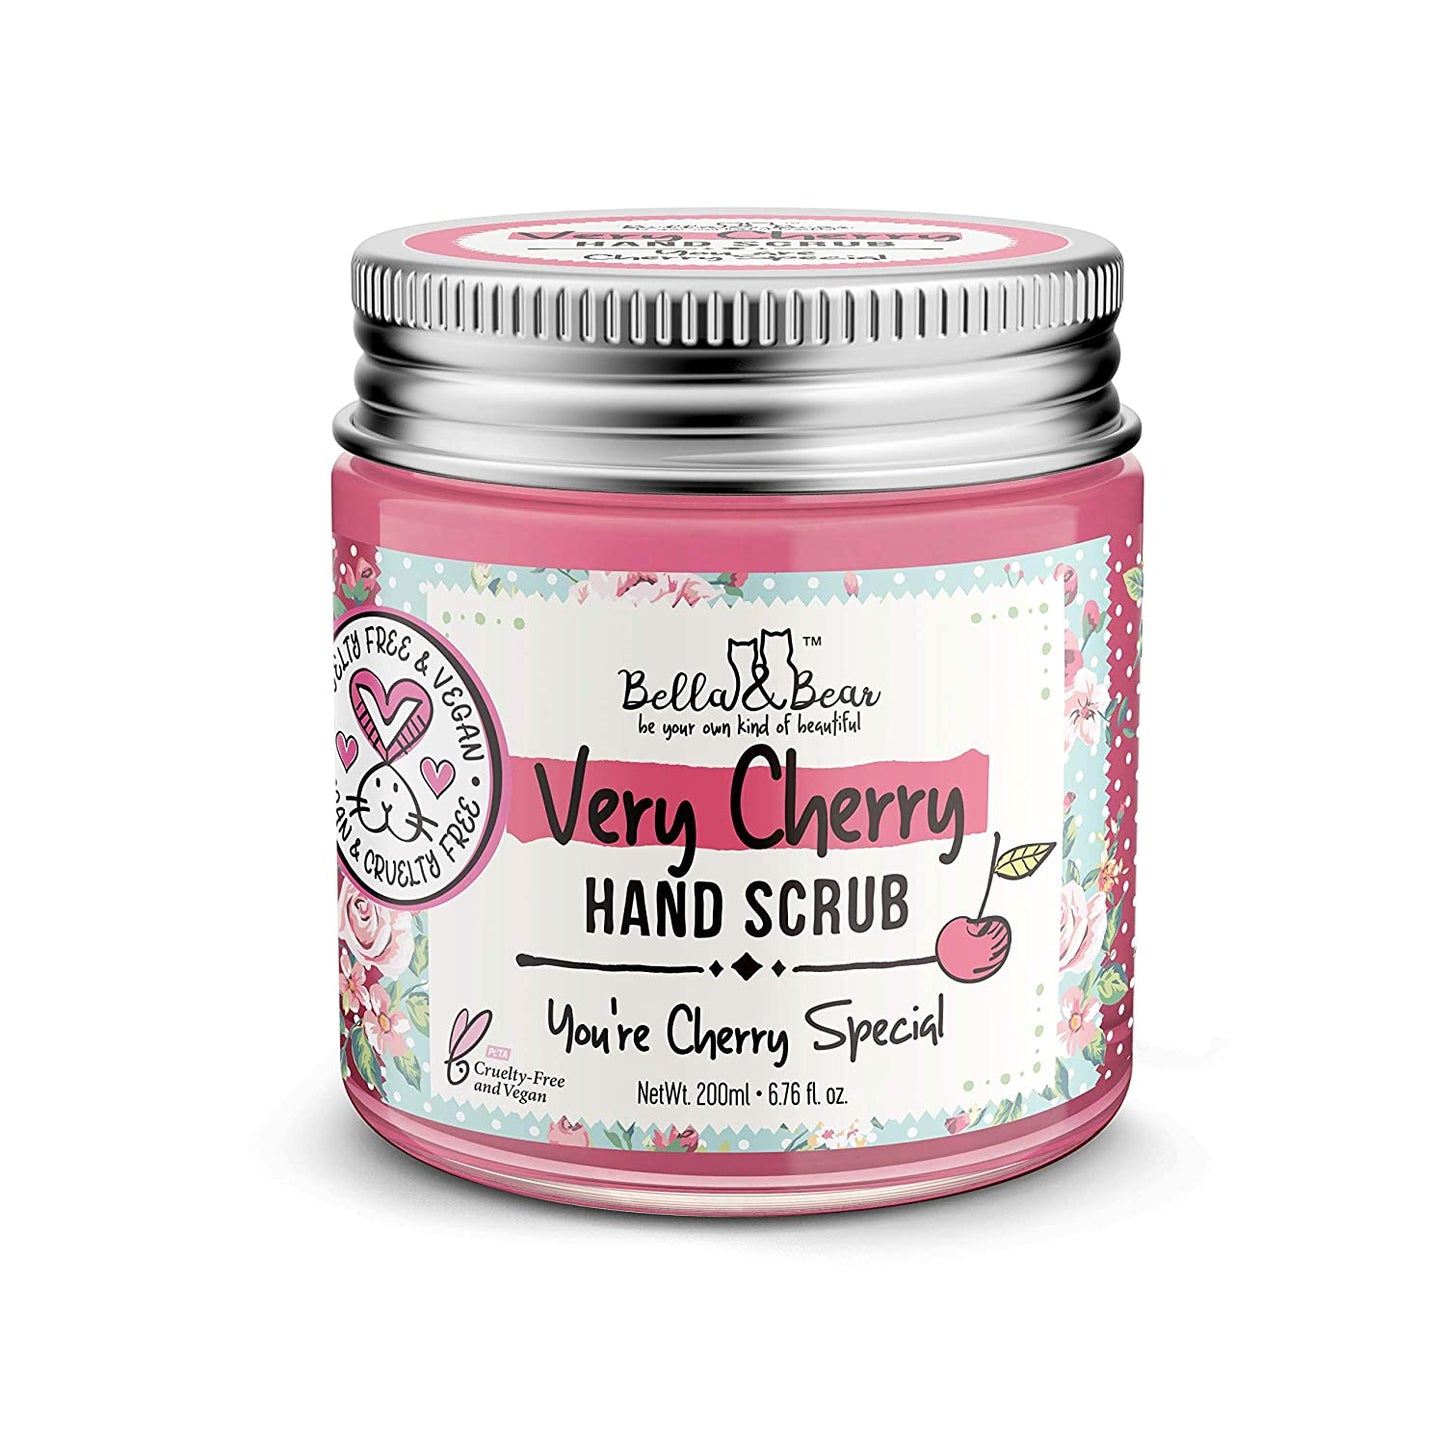 Bella & Bear - Very Cherry Hand Scrub 6.7oz